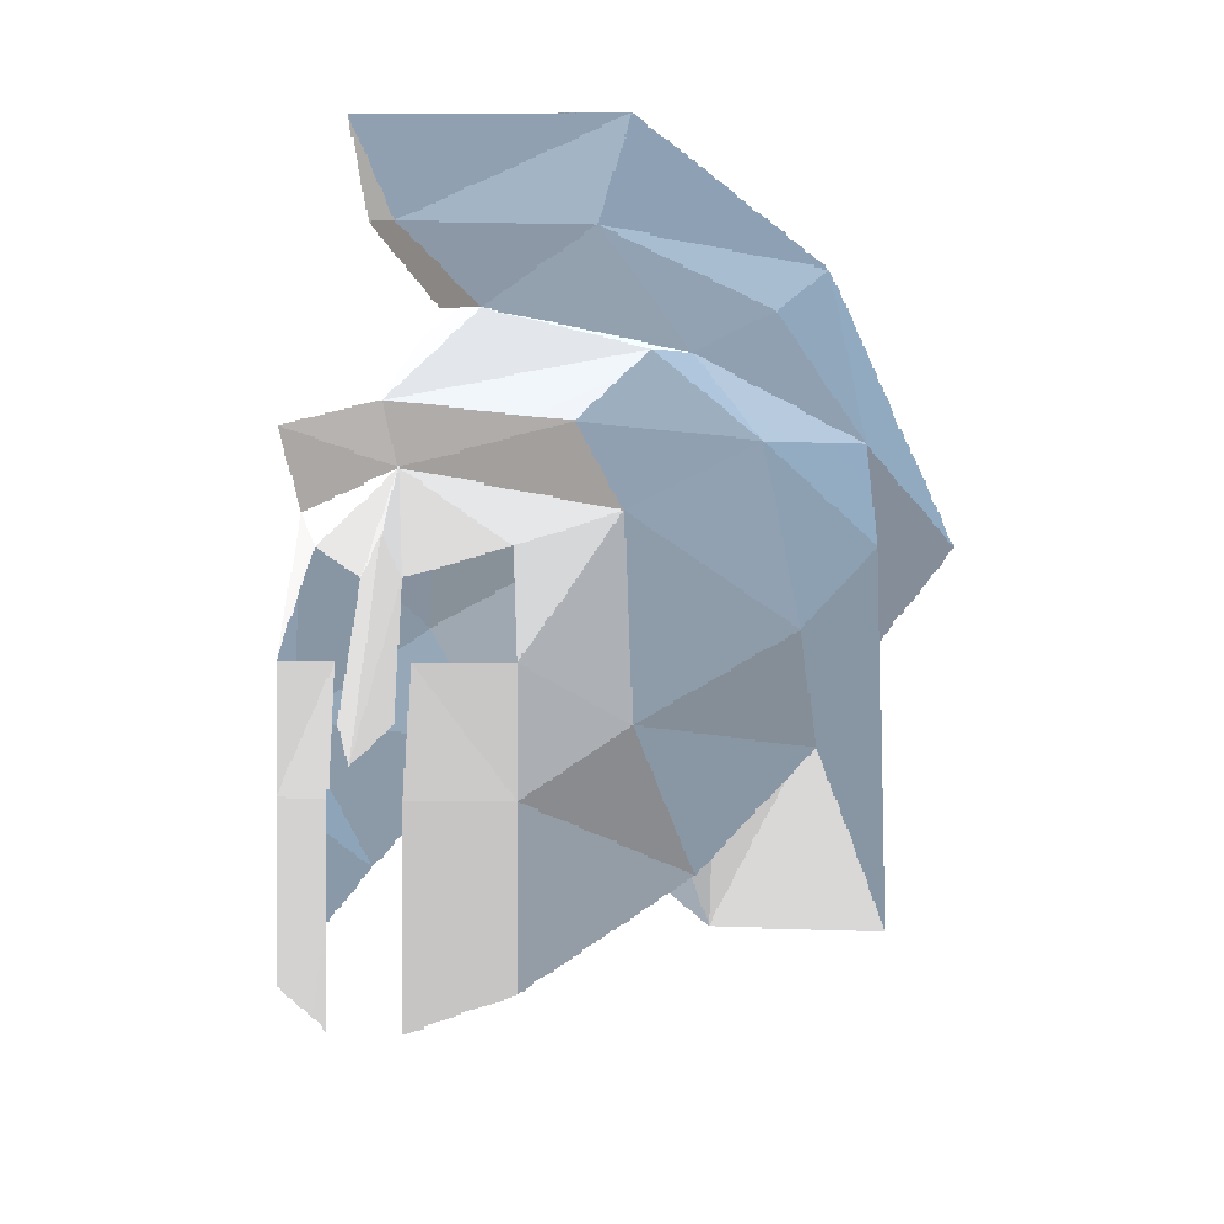 Legionary helmet. 3D models. Create Papercraft, pepakura models and download schemes